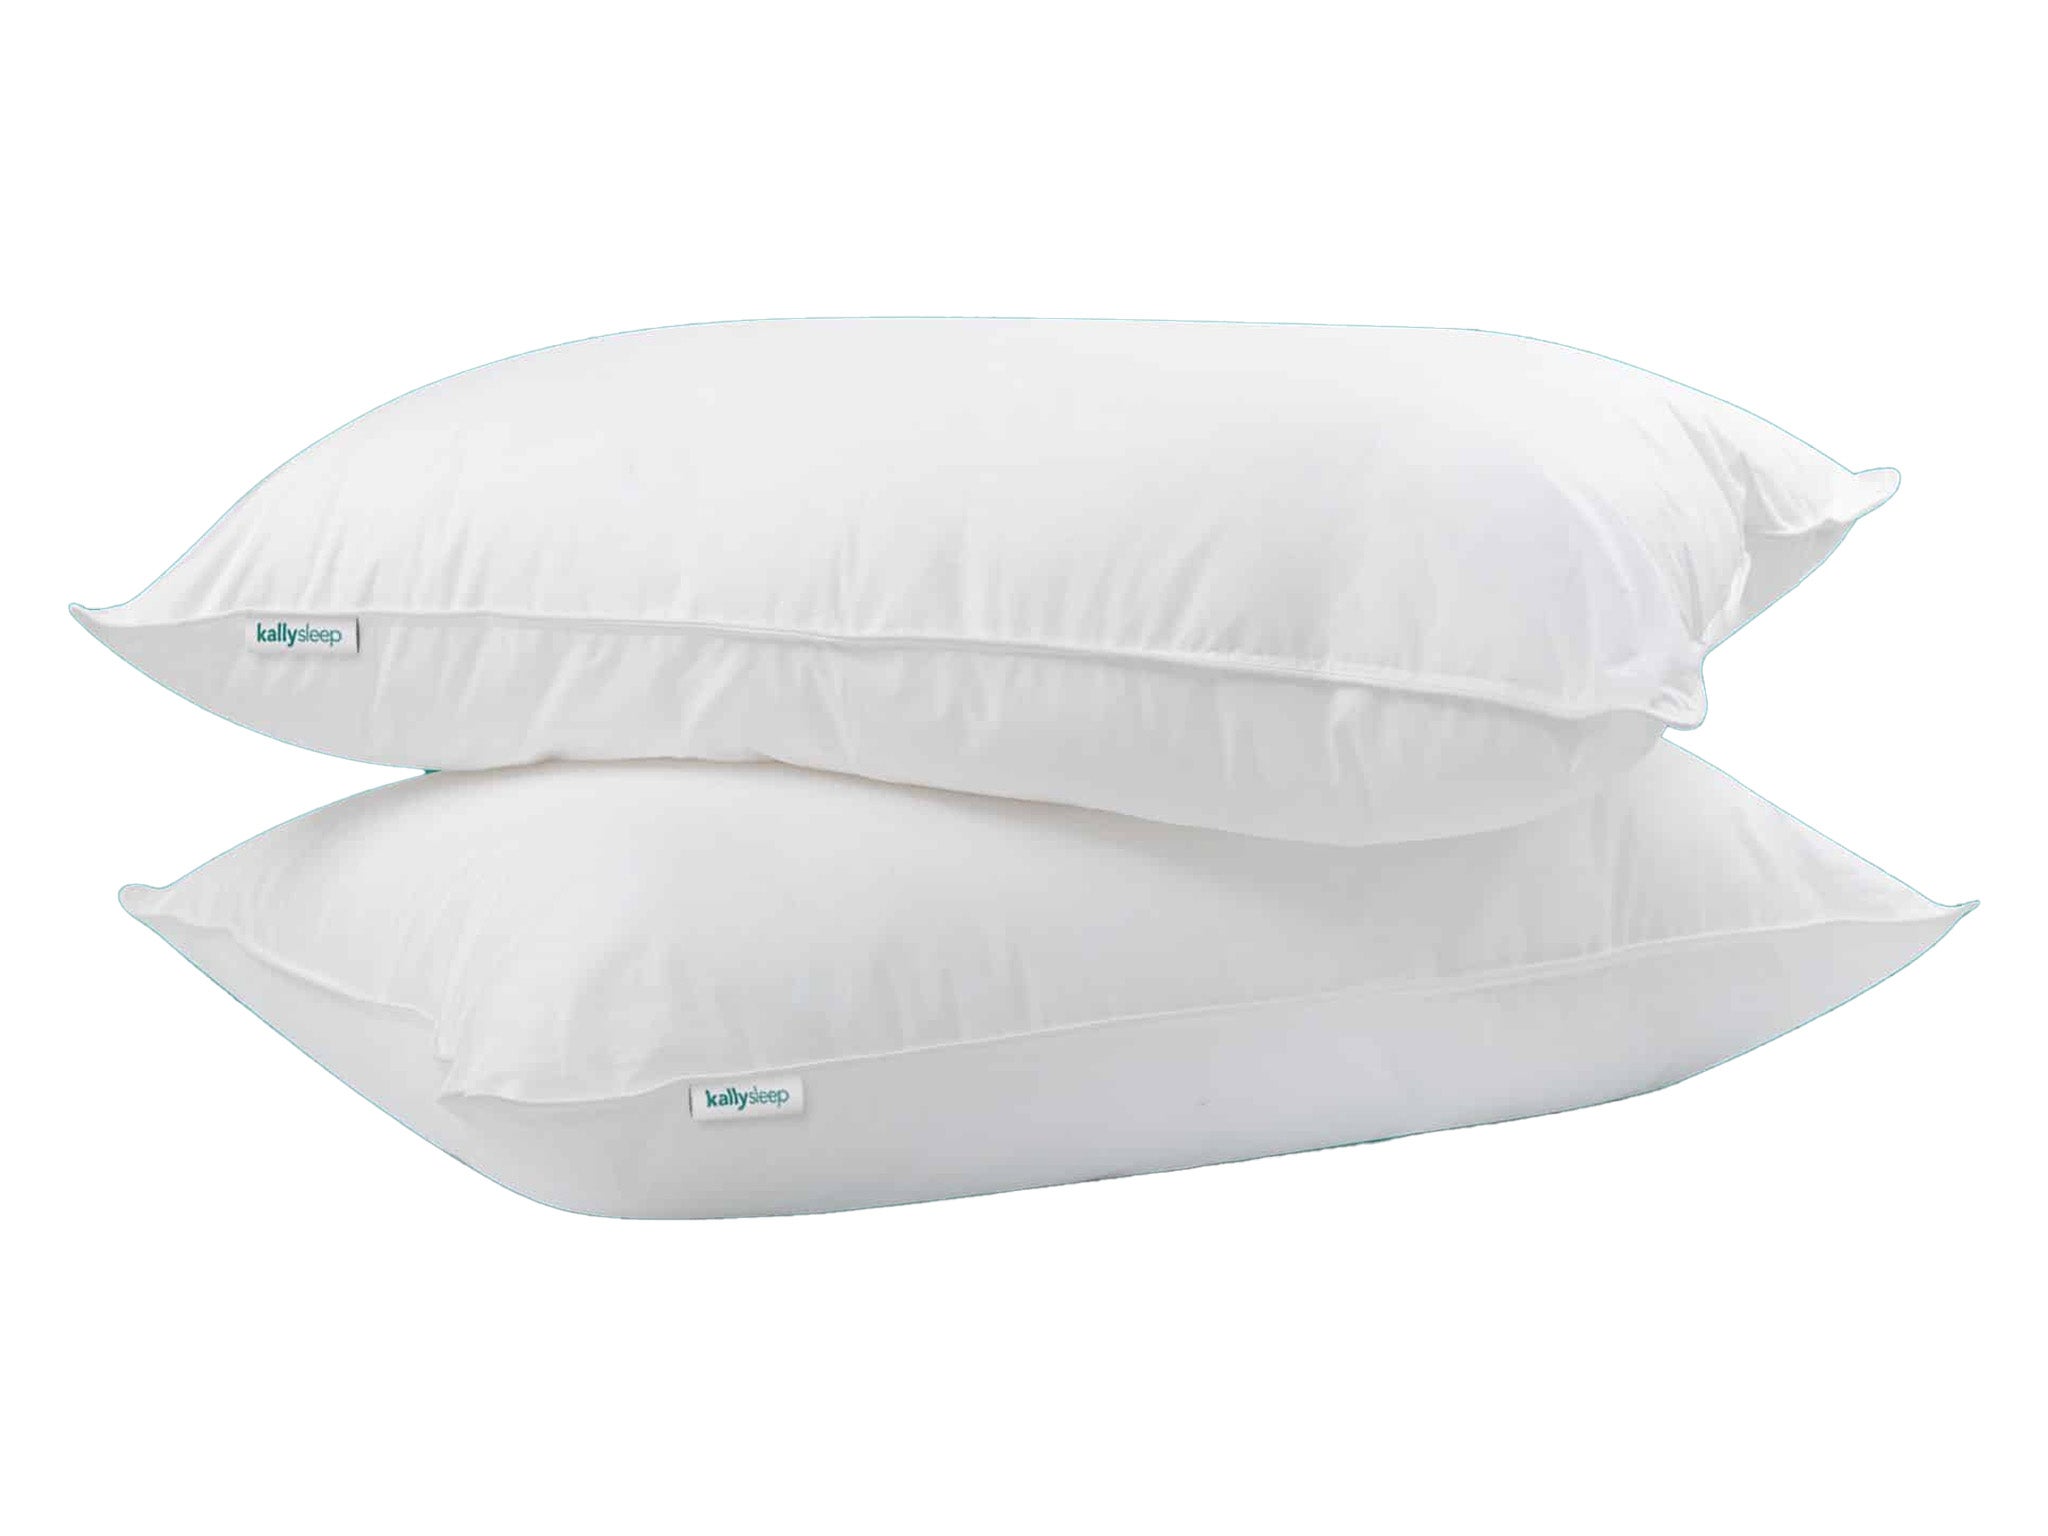 Kally Sleep five-star hotel pillows, twin pack